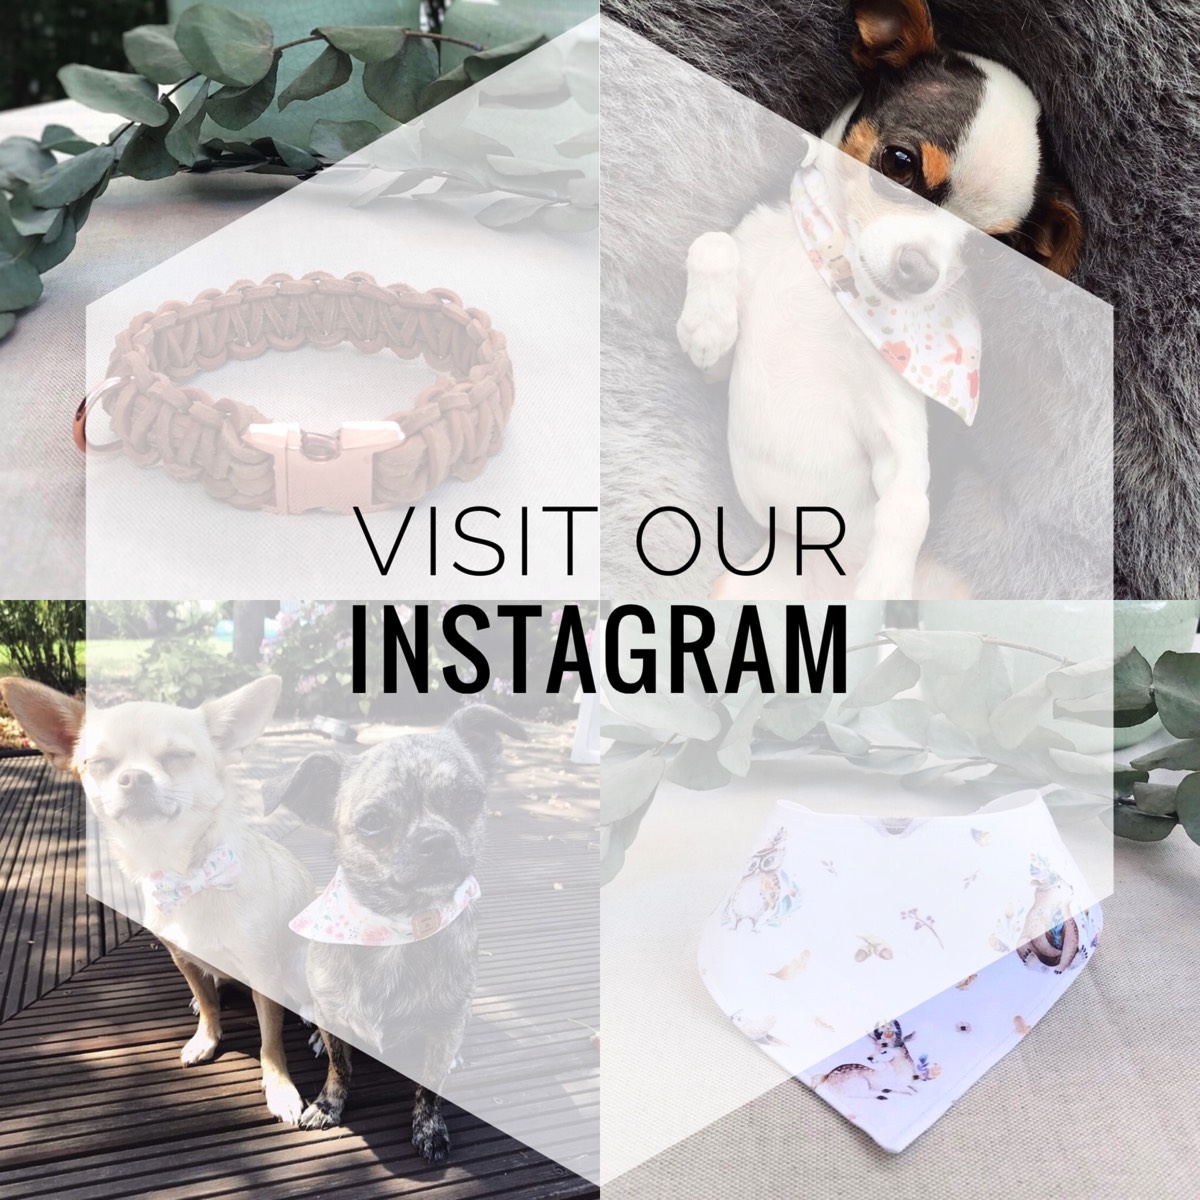 Visit our Instagram